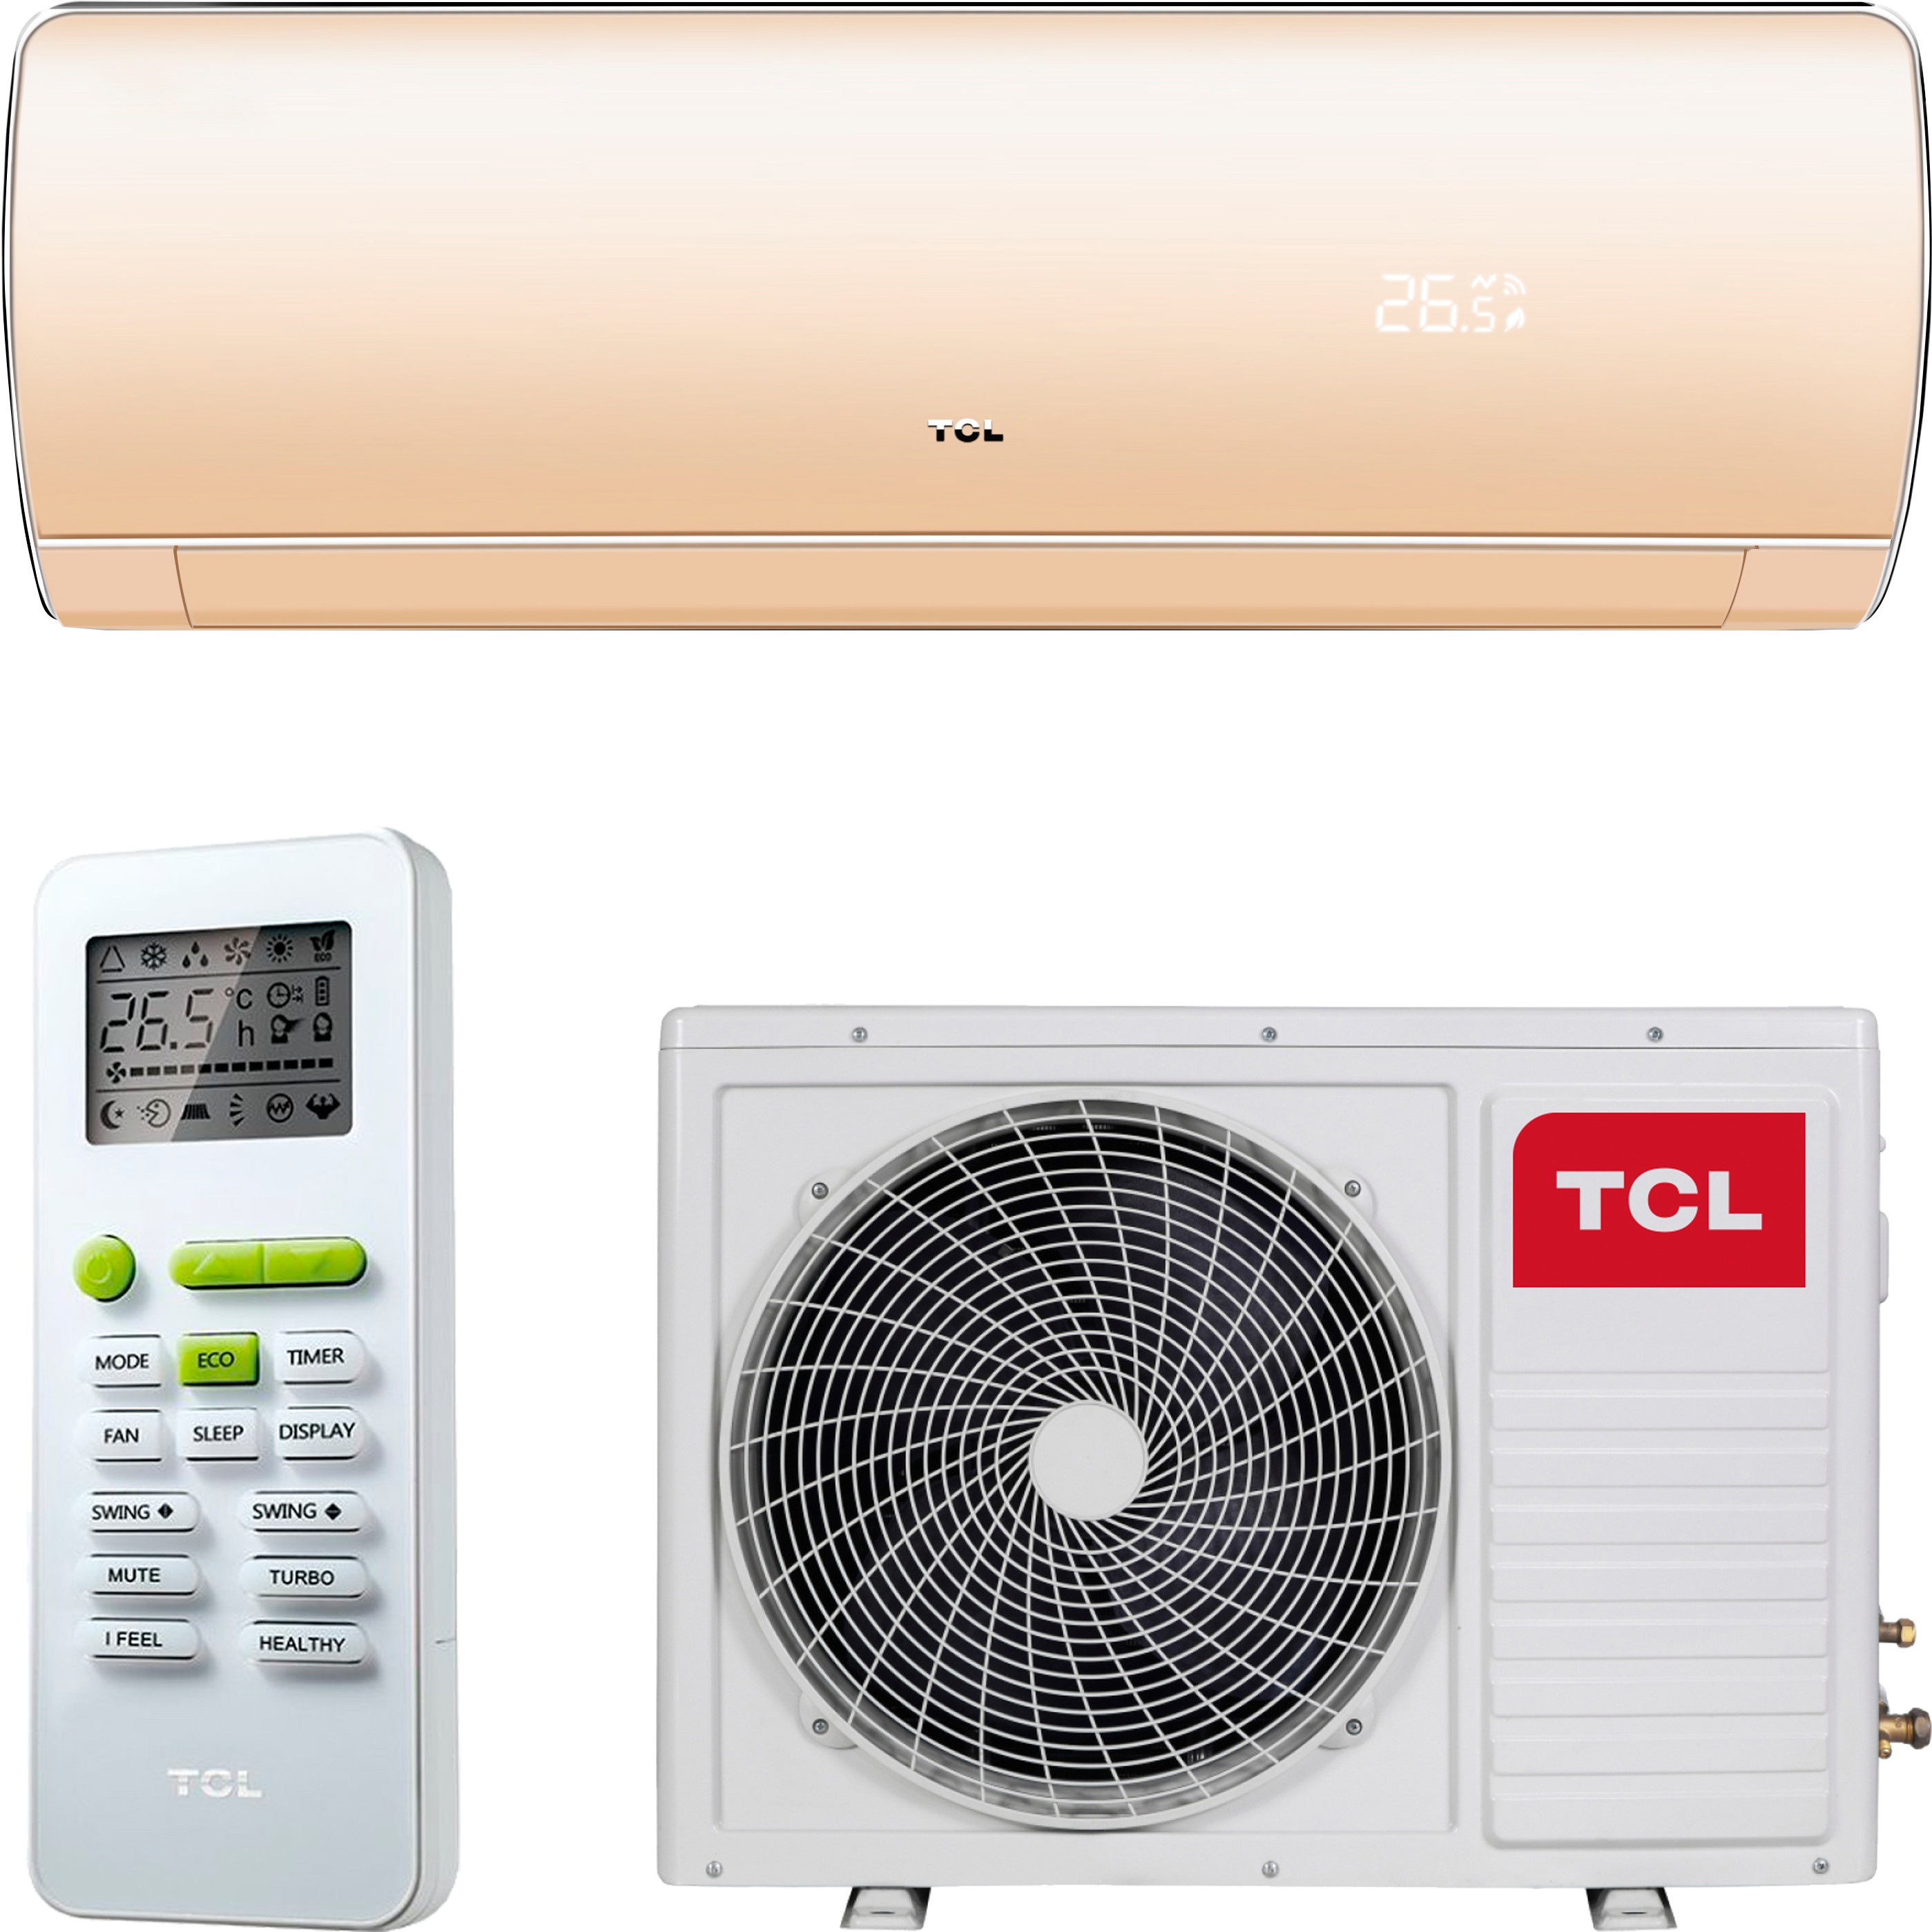 Кондиционер сплит-система TCL F6 Inverter TAC-12CHSA/F6 в интернет-магазине, главное фото